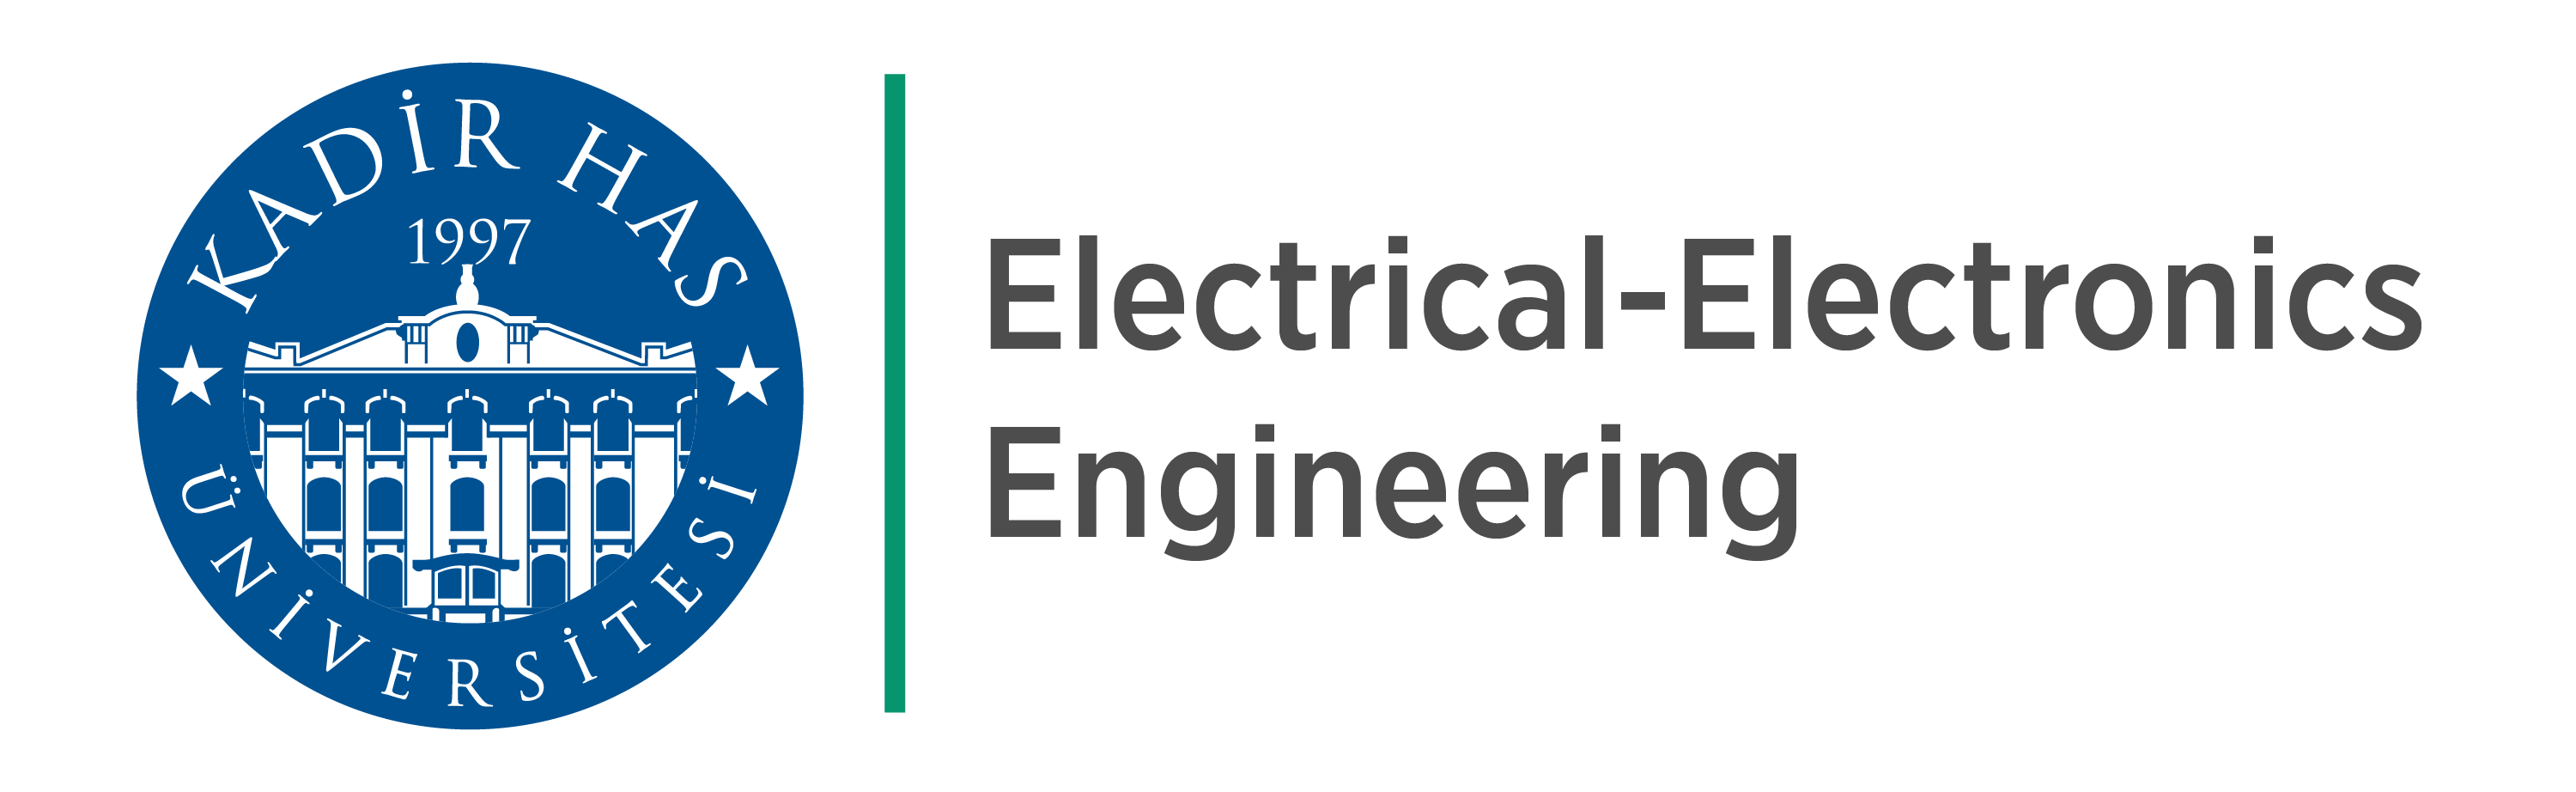 Electrical Electronics Engineering
